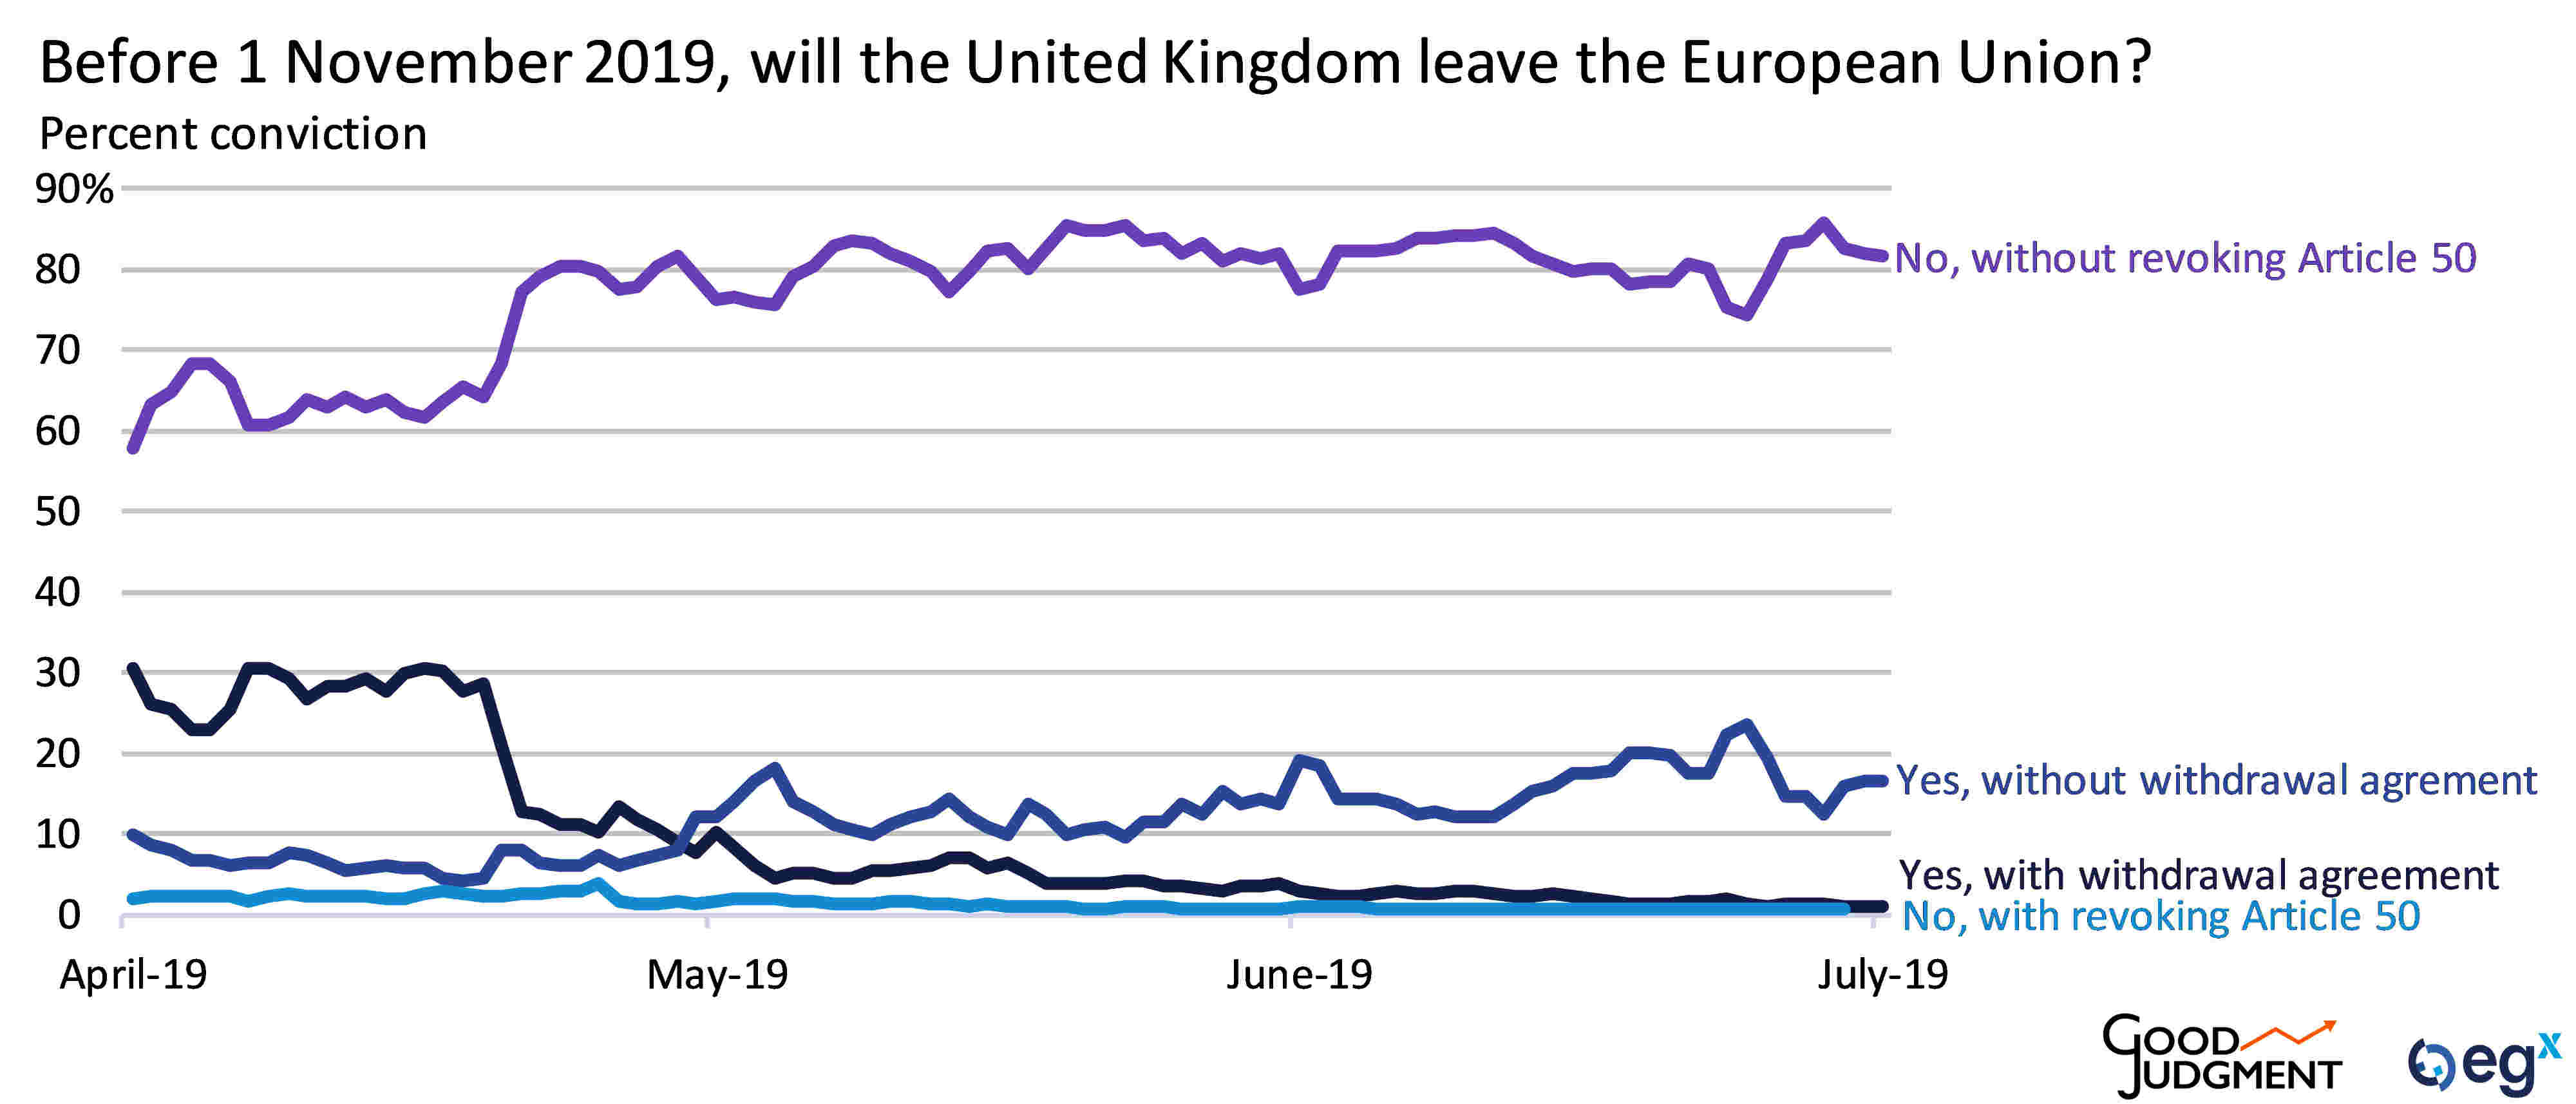 Before 1 November 2019, will the United Kingdom leave the European Union